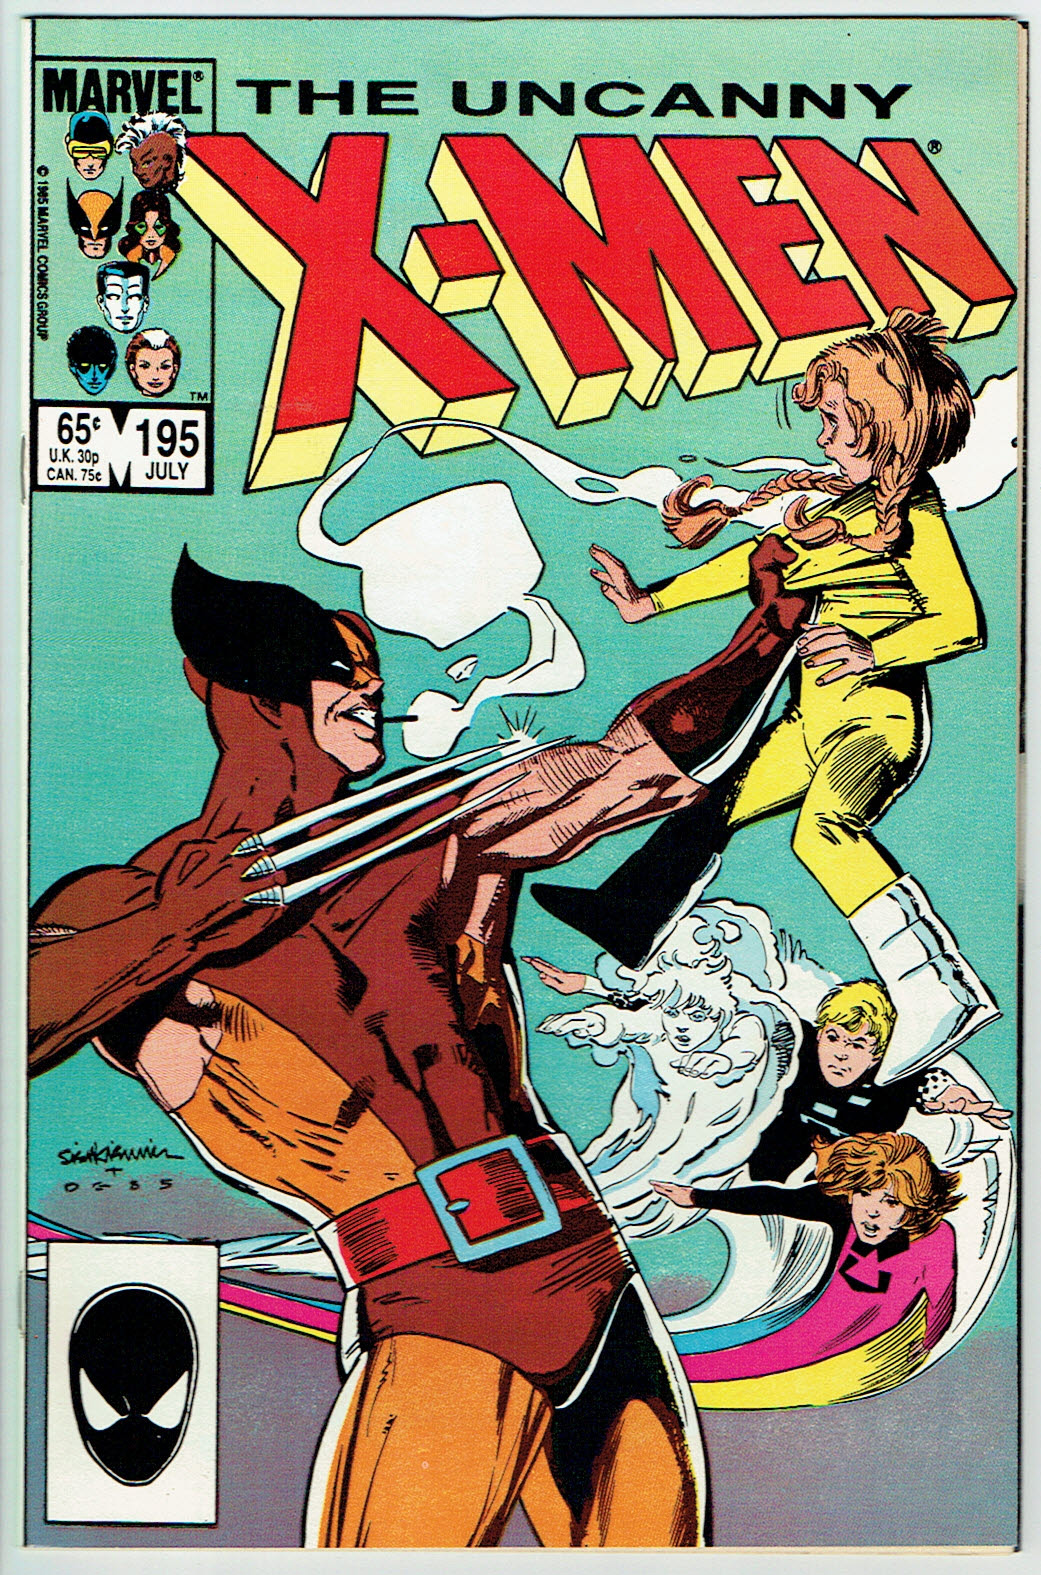 Uncanny X-Men #195